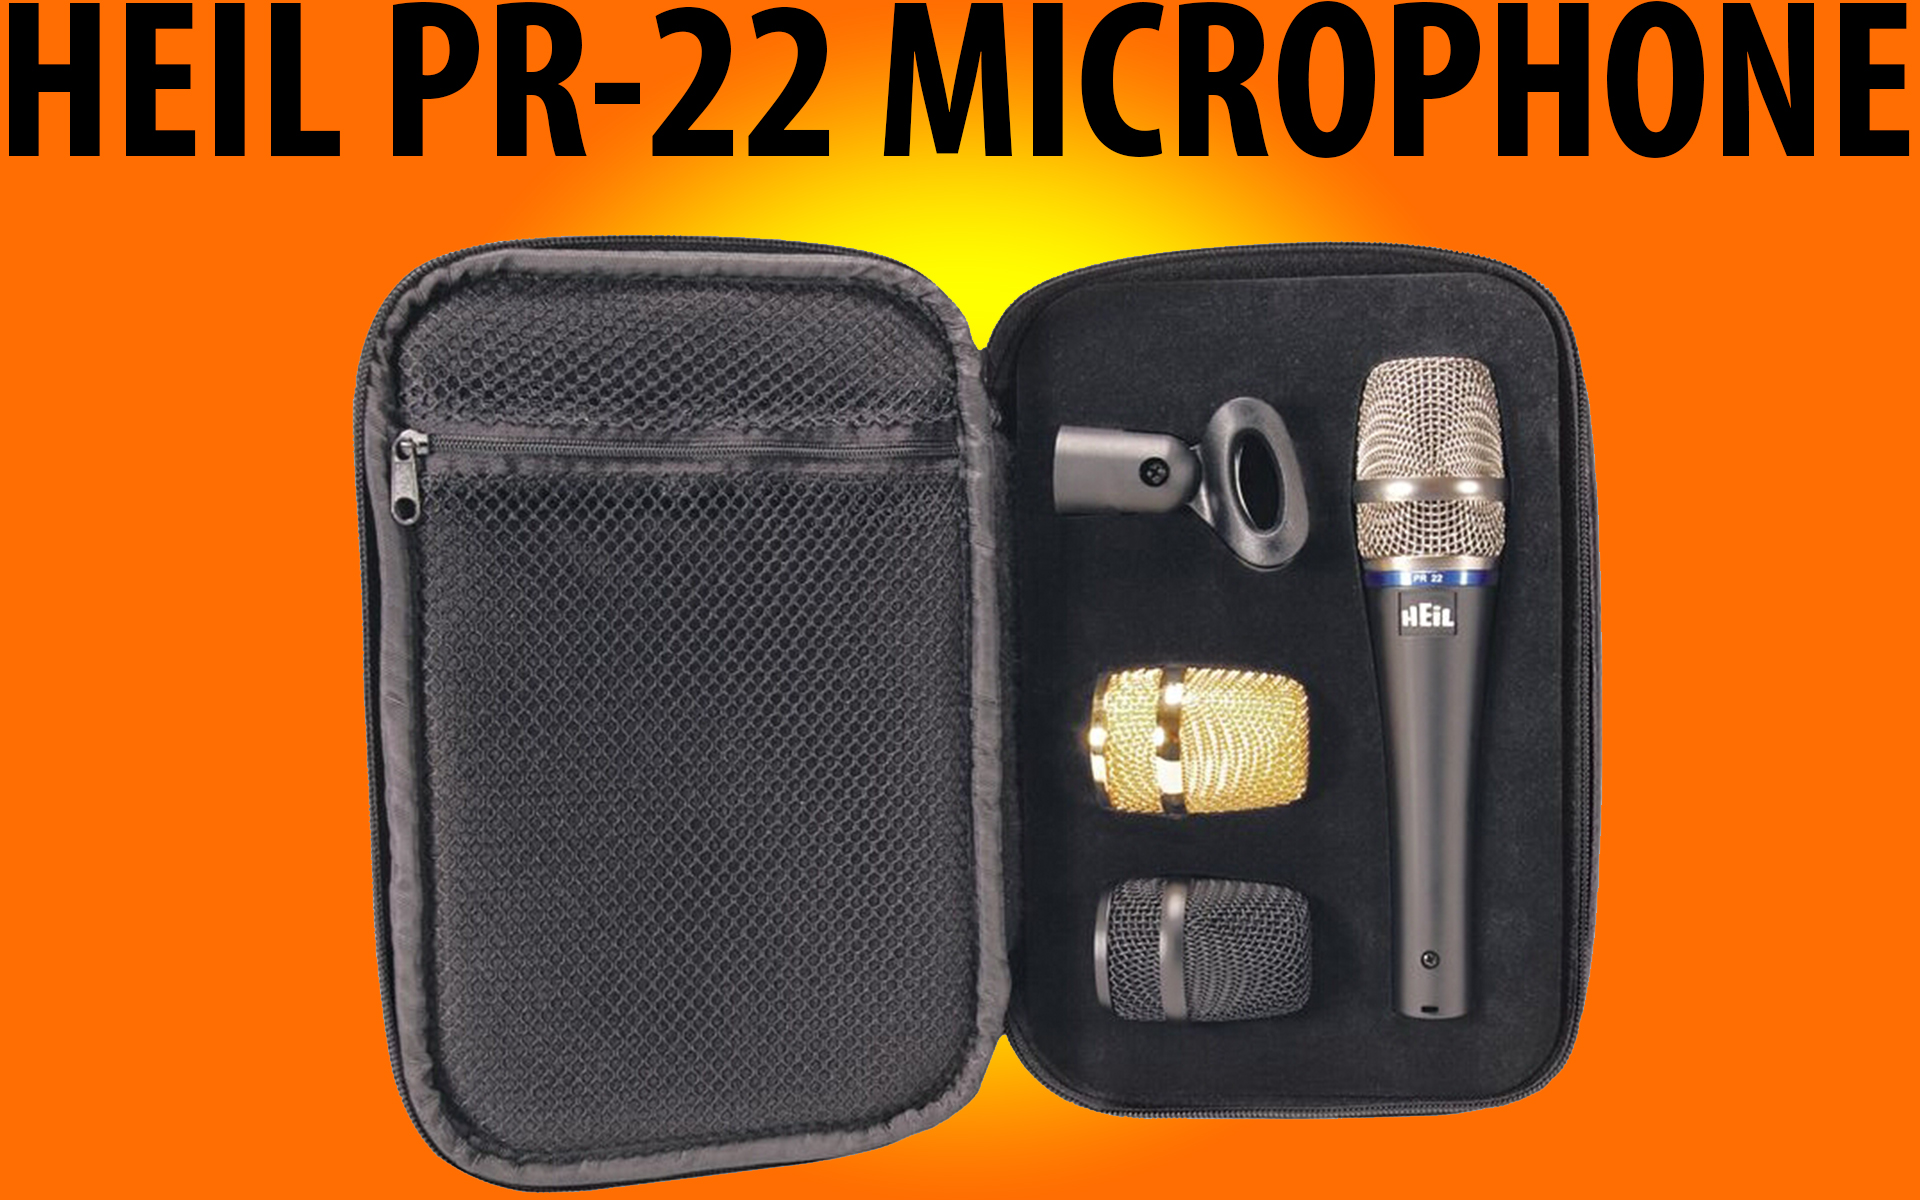 Heil PR-22 Microphone Review